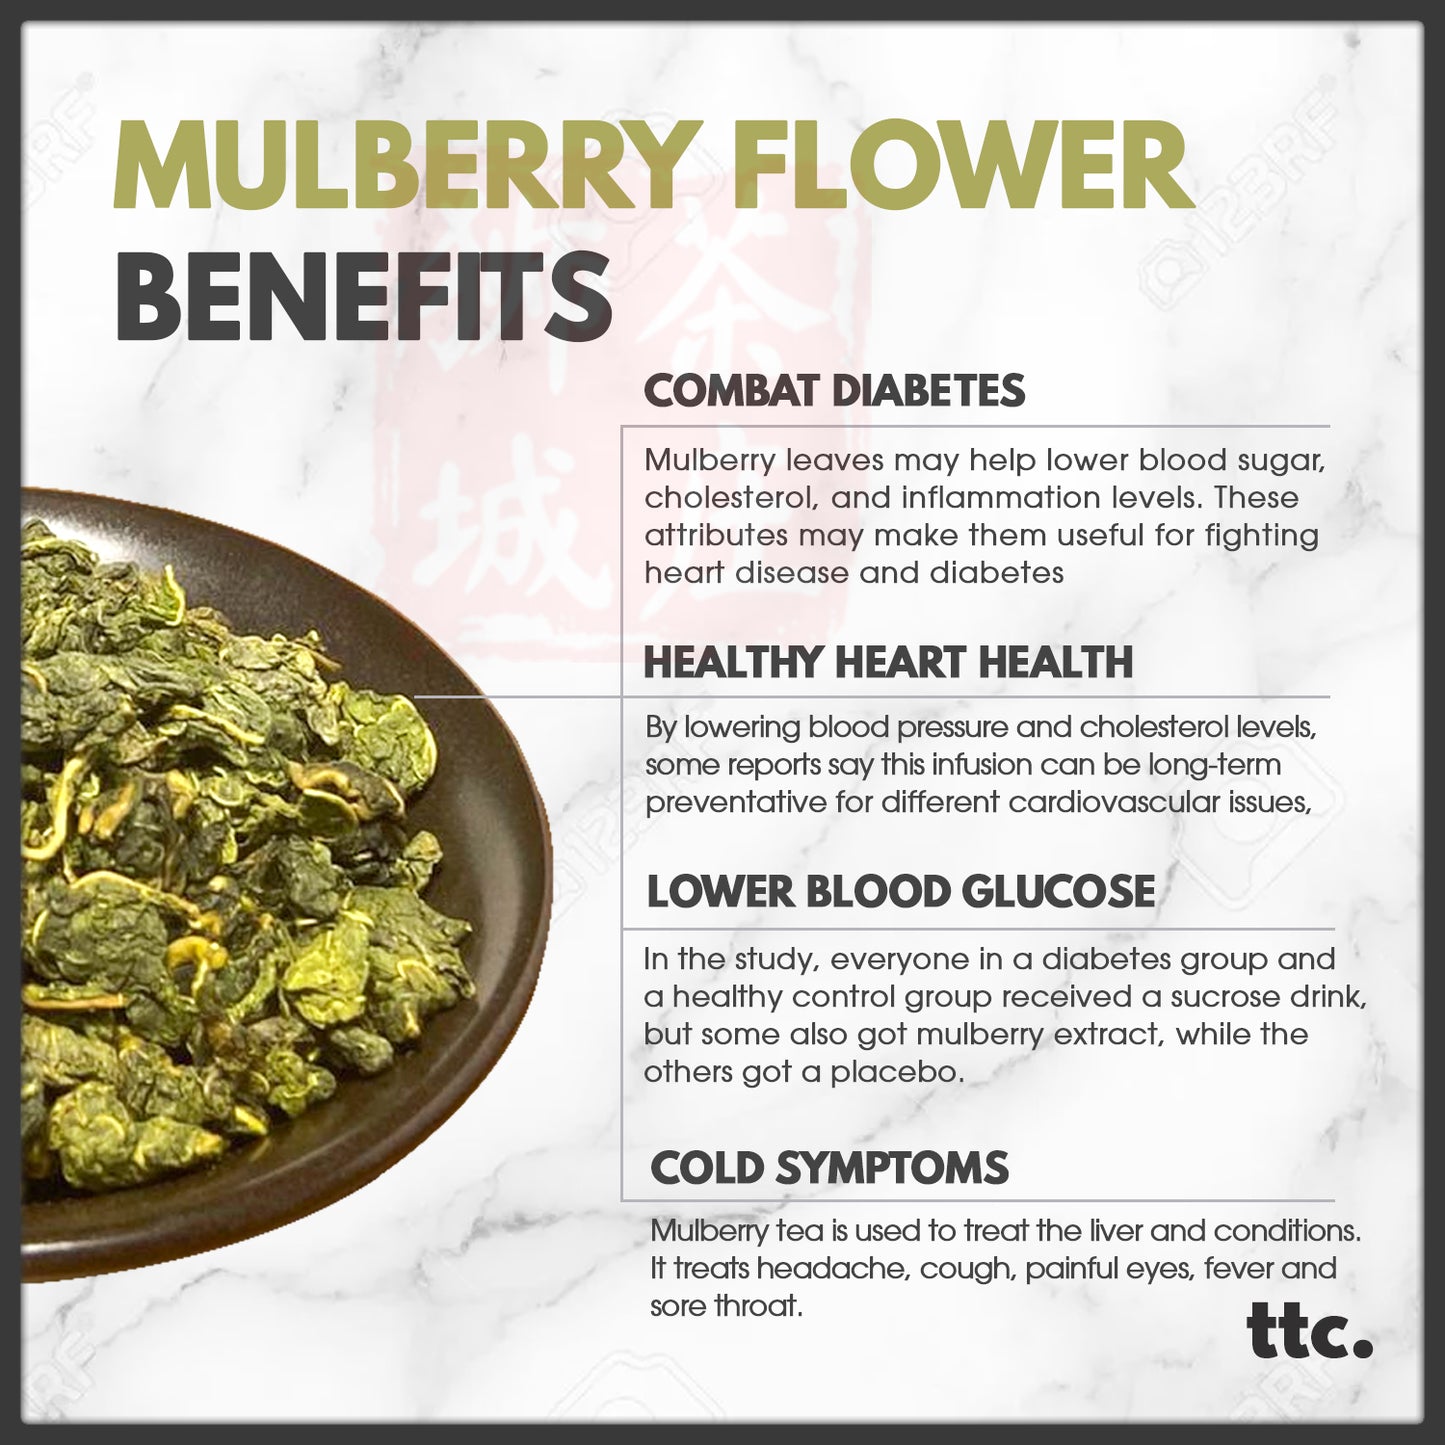 Mulberry Flower Tea (100g)